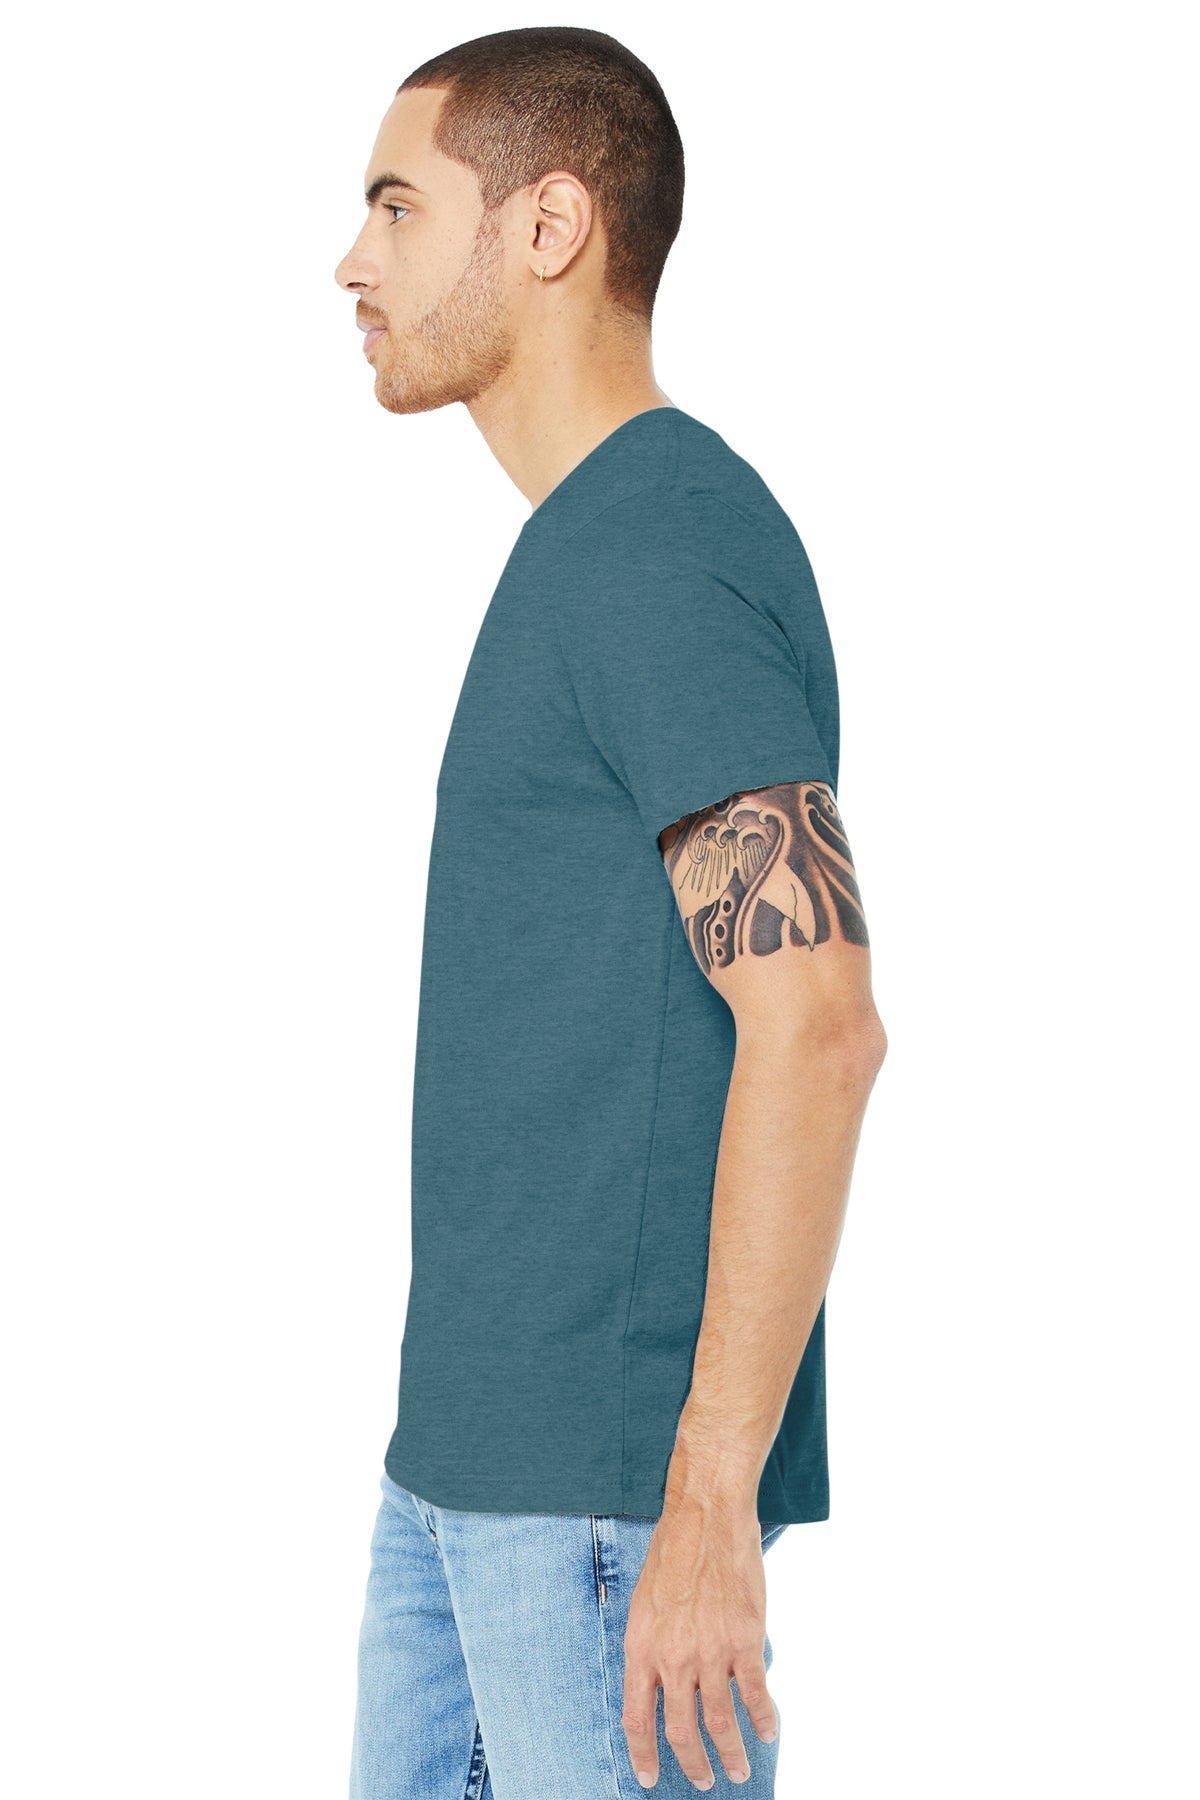 bella + canvas unisex jersey short sleeve t-shirt 3001c heather slate